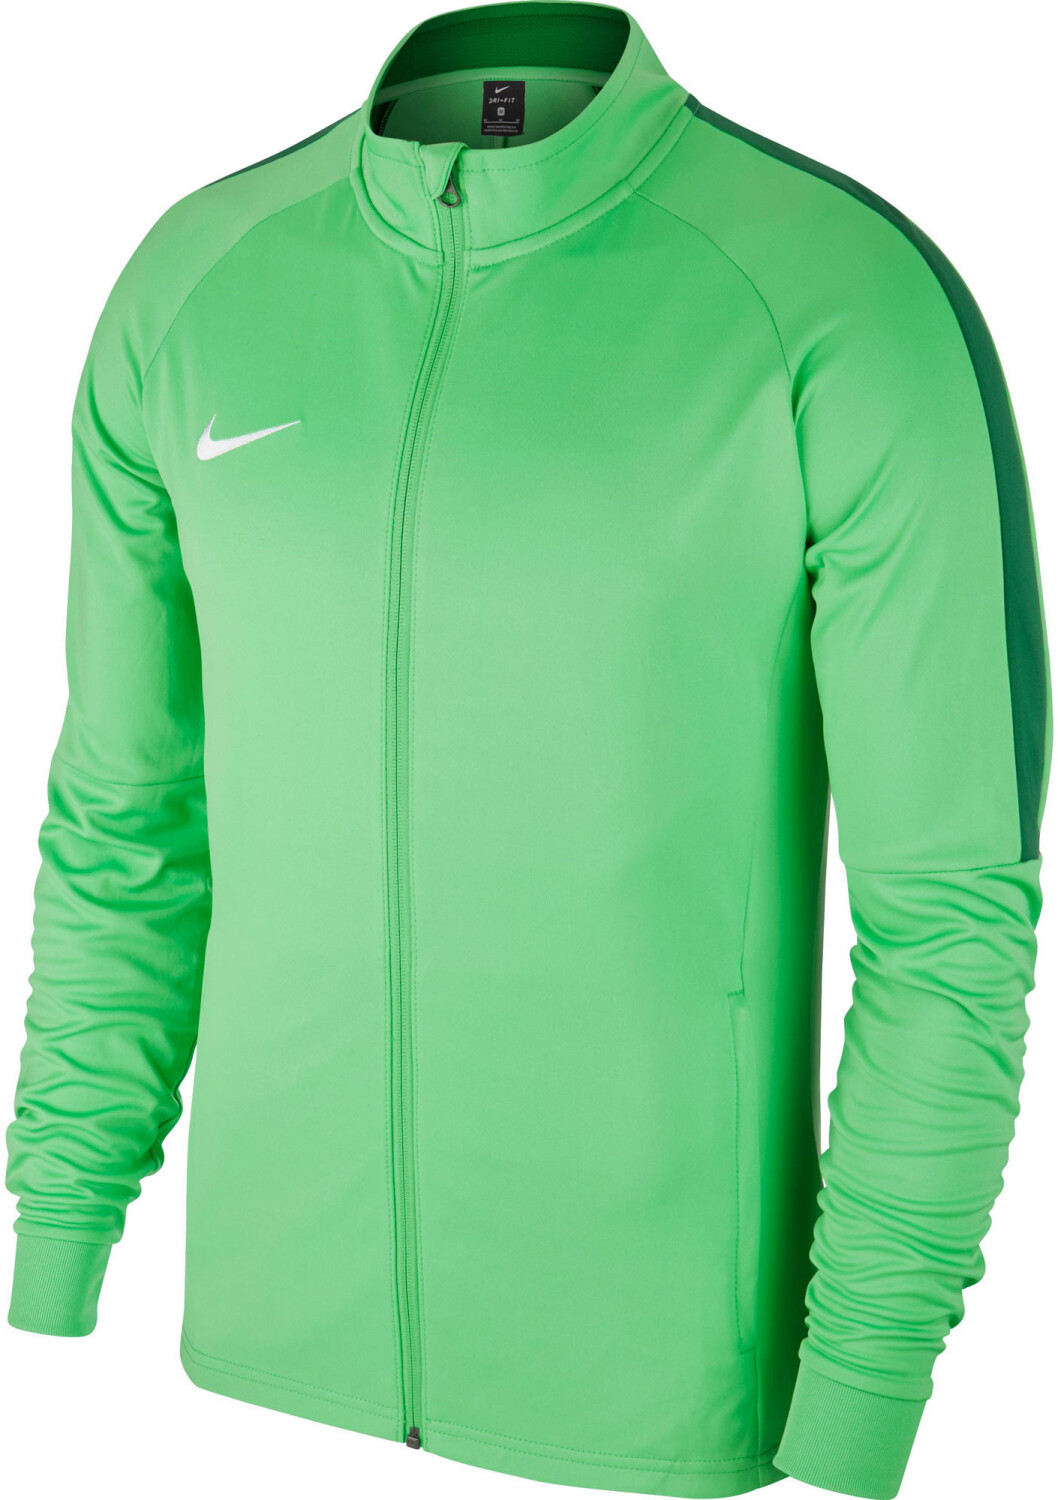 Nike Dry Academy 18 Training Jacket lt green spark/pine green/white